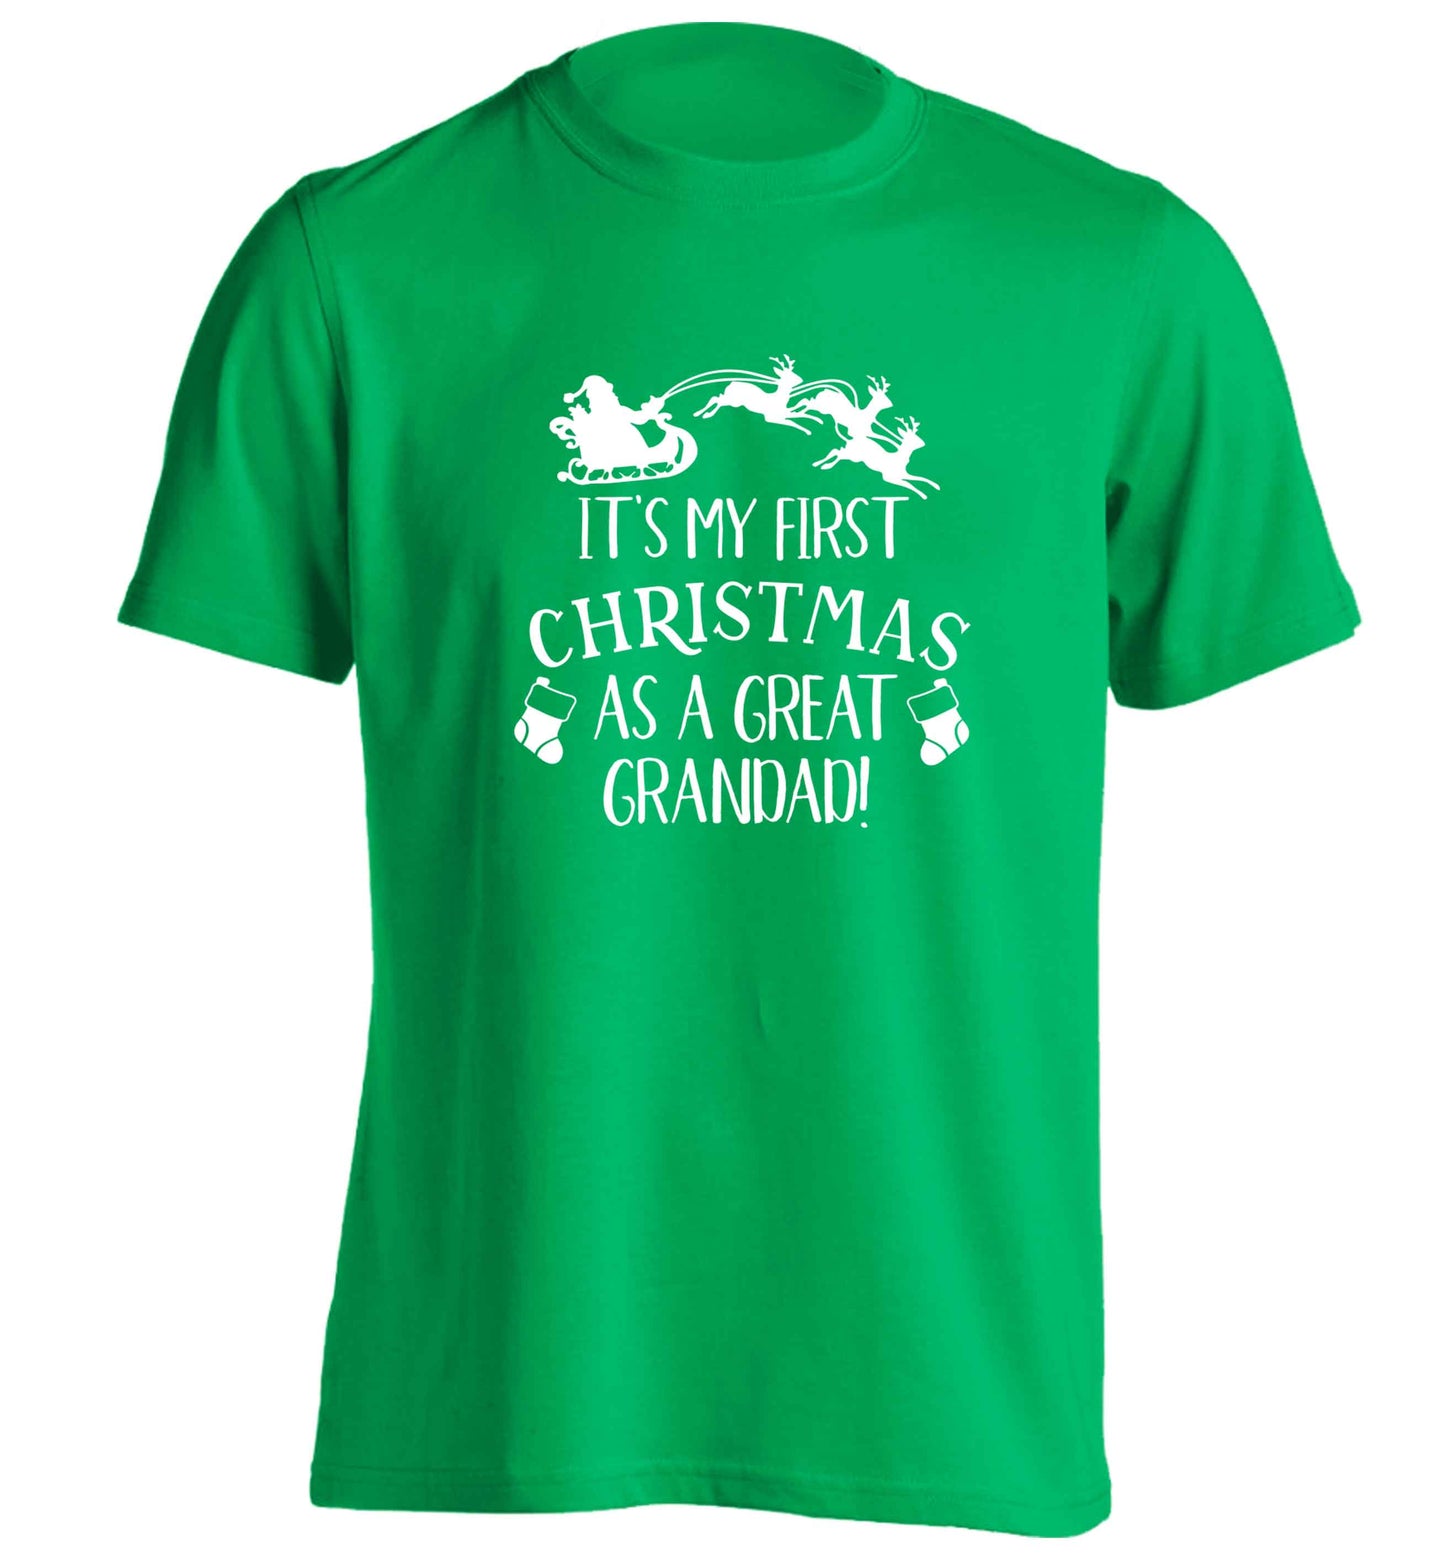 It's my first Christmas as a great grandad! adults unisex green Tshirt 2XL